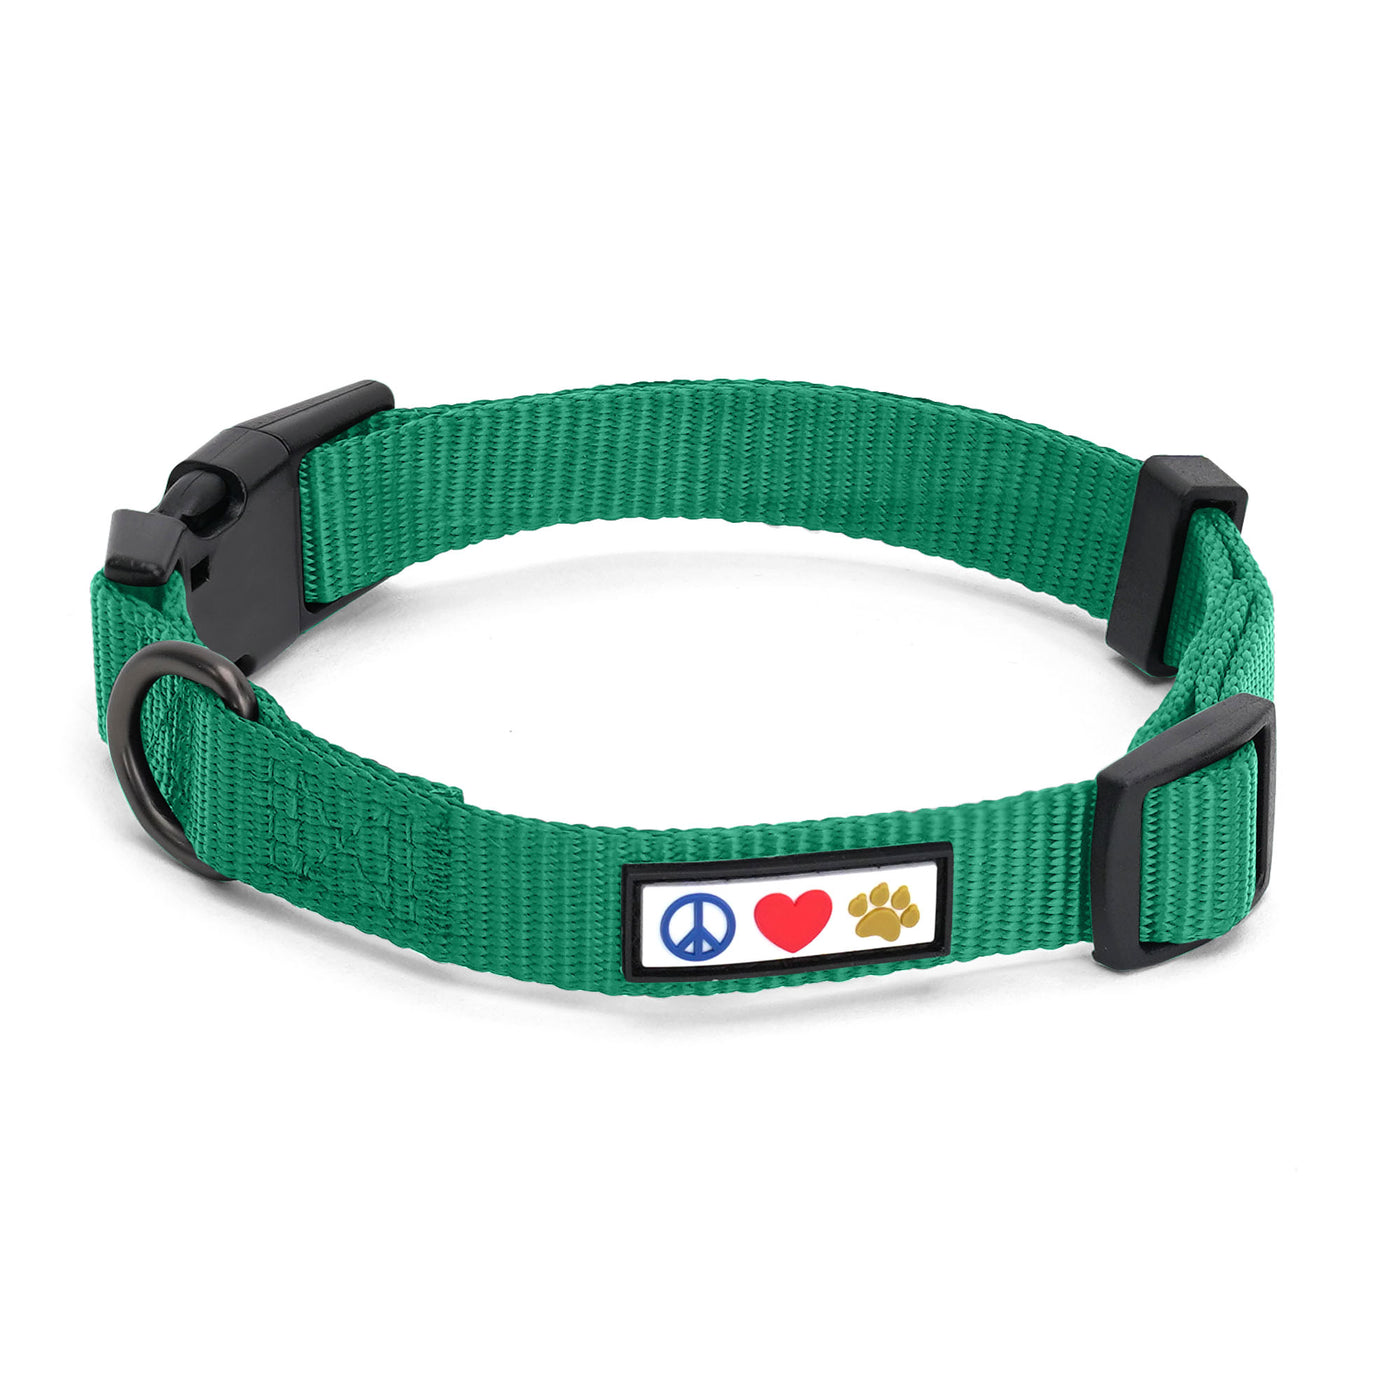 Pawtitas Green Personalized Reflective Martingale Dog Collar, Large